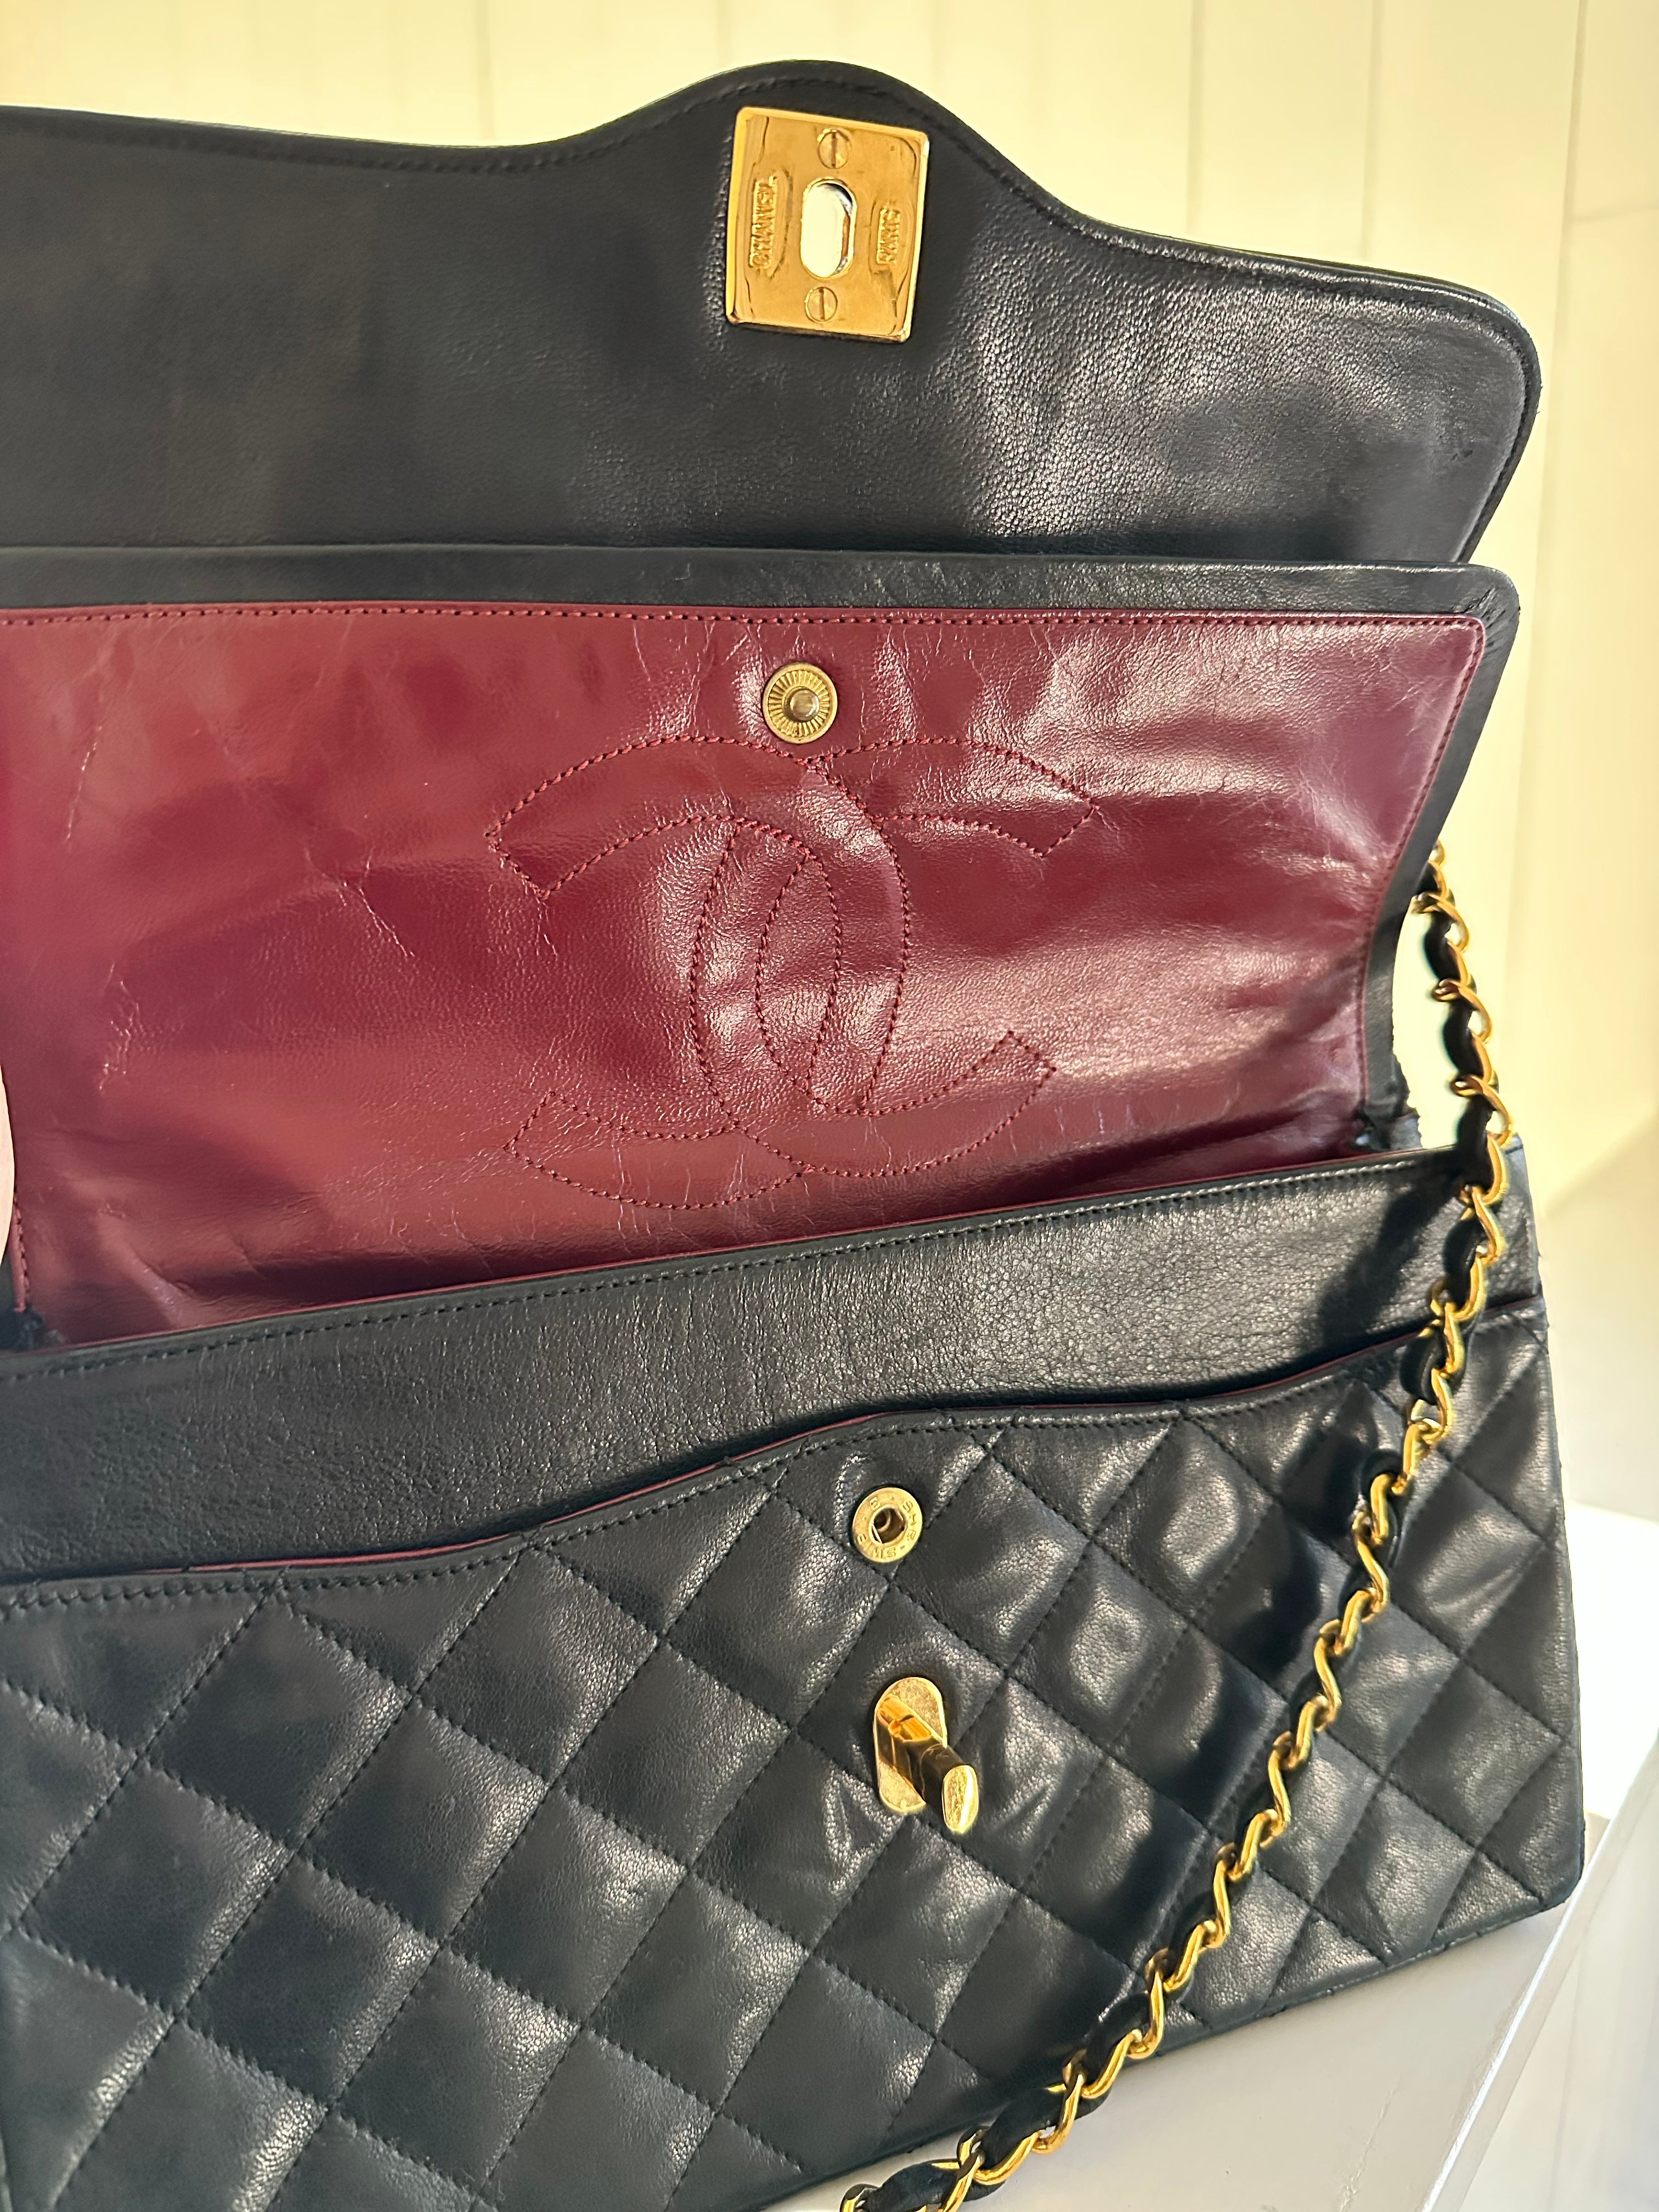 My New Bag: Chanel Trendy CC Bag  Fashion bags, Bags, Bags designer